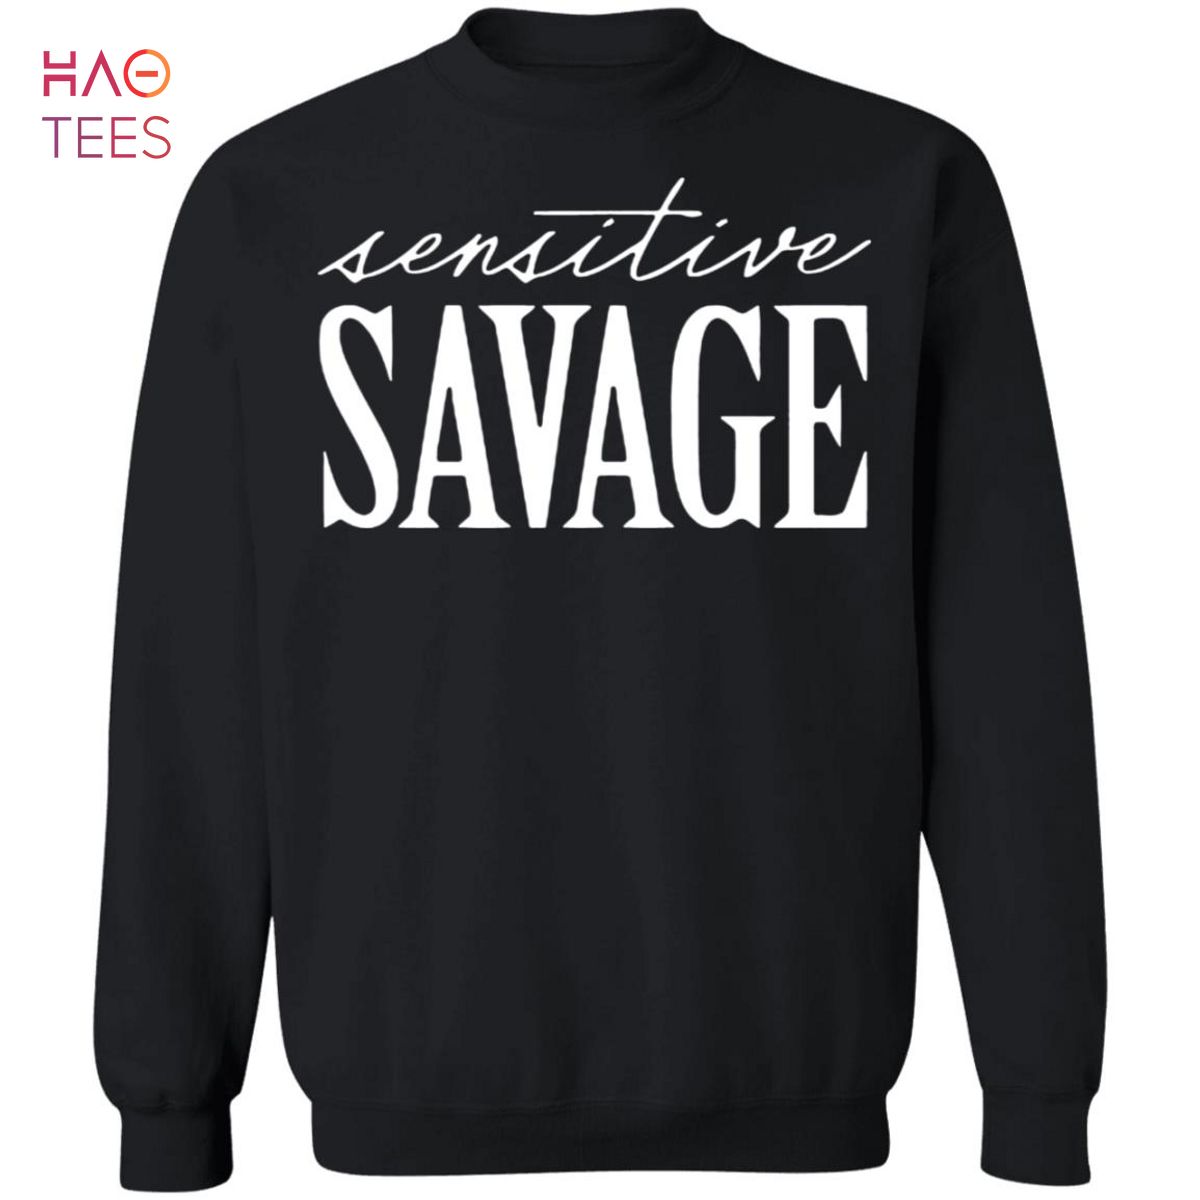 BEST Sensitive Savage Sweater